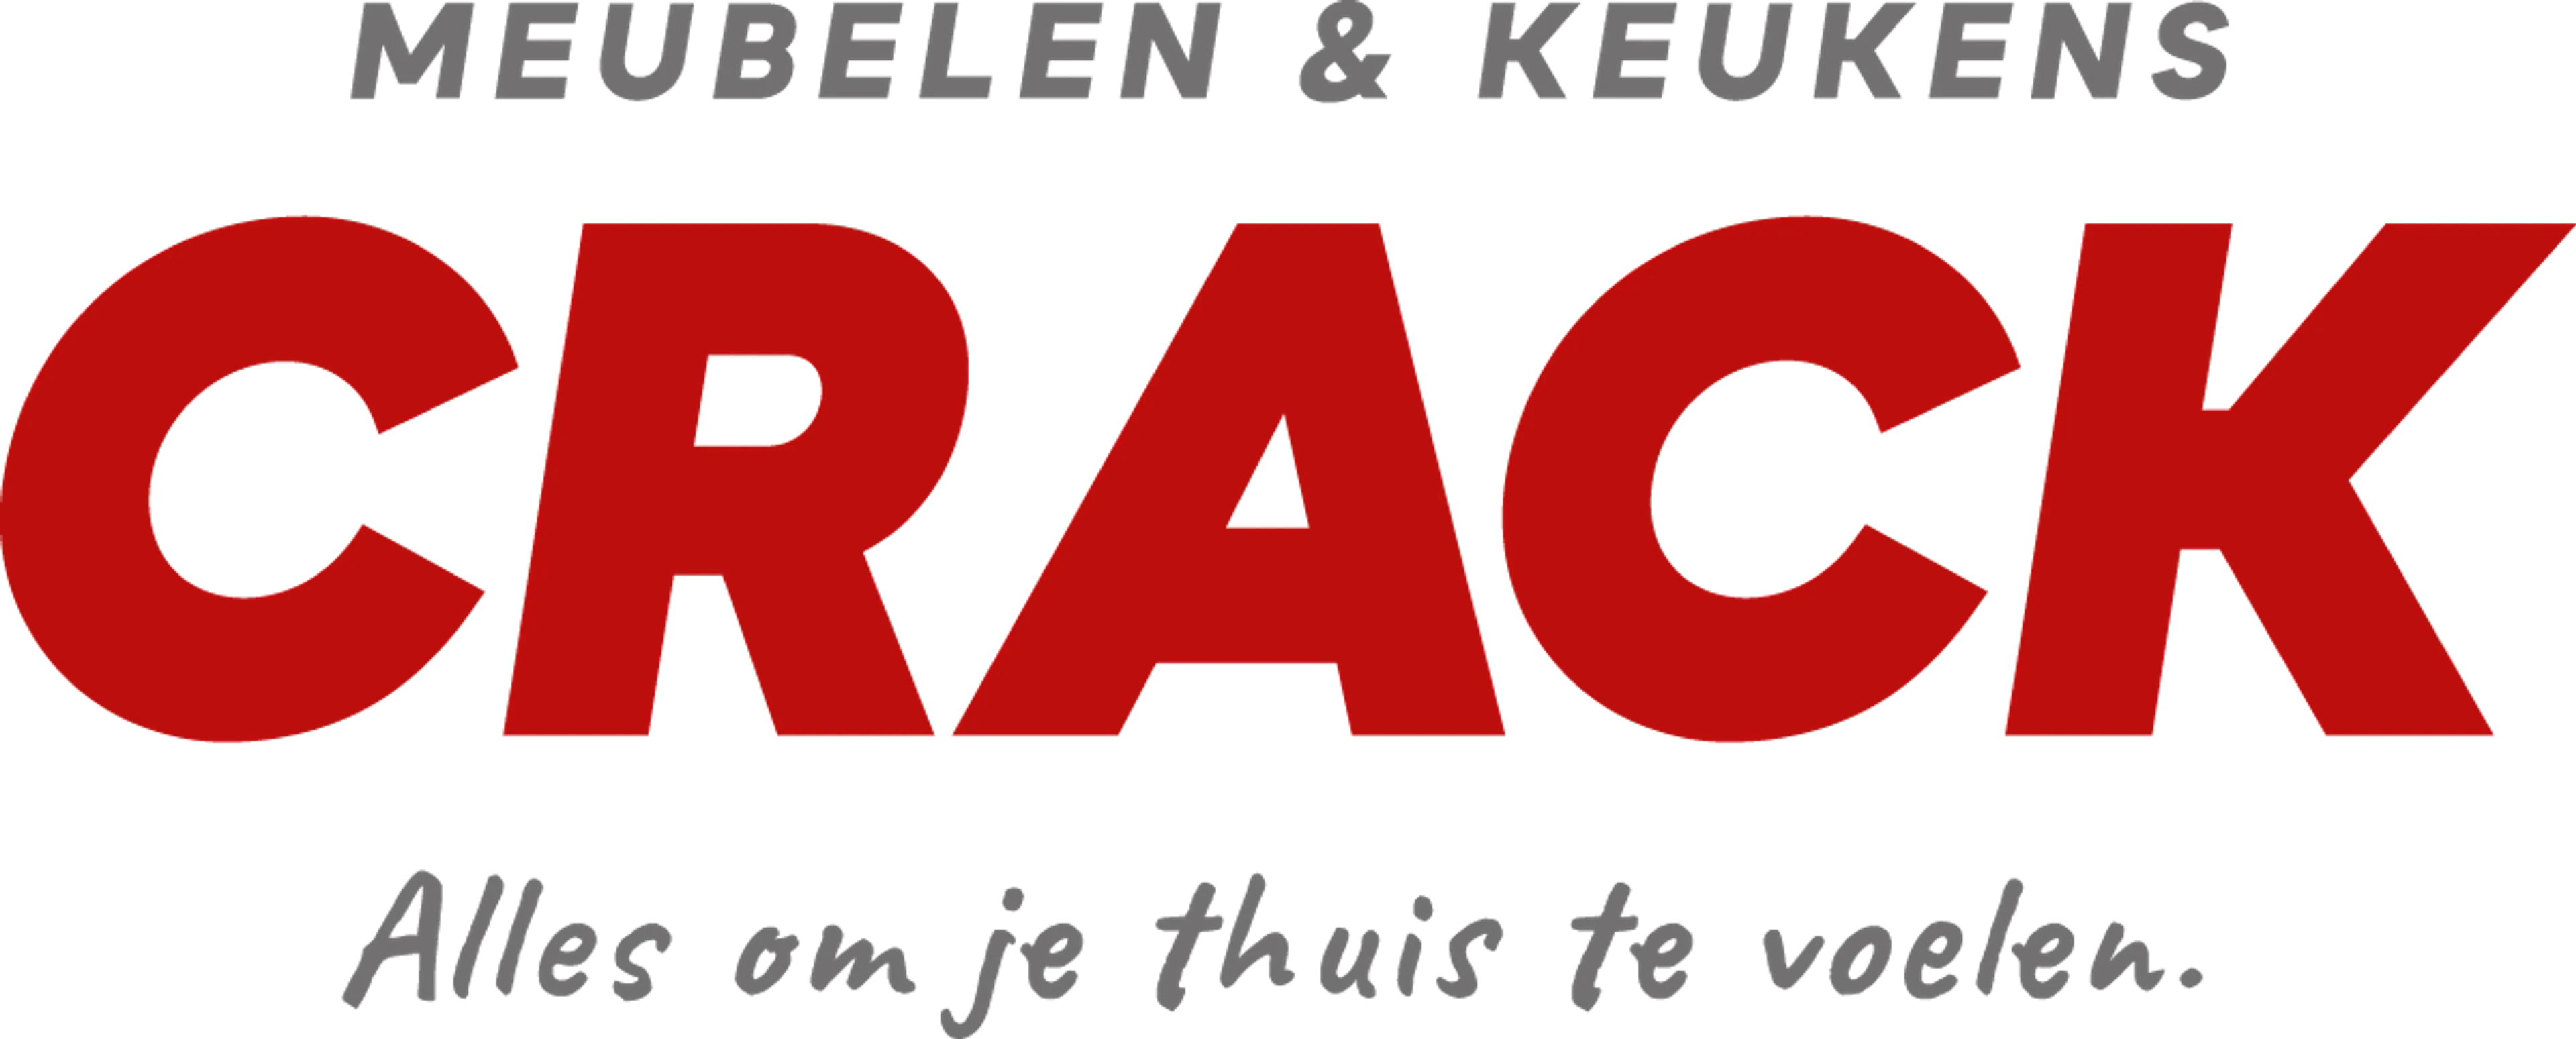 CRACK logo